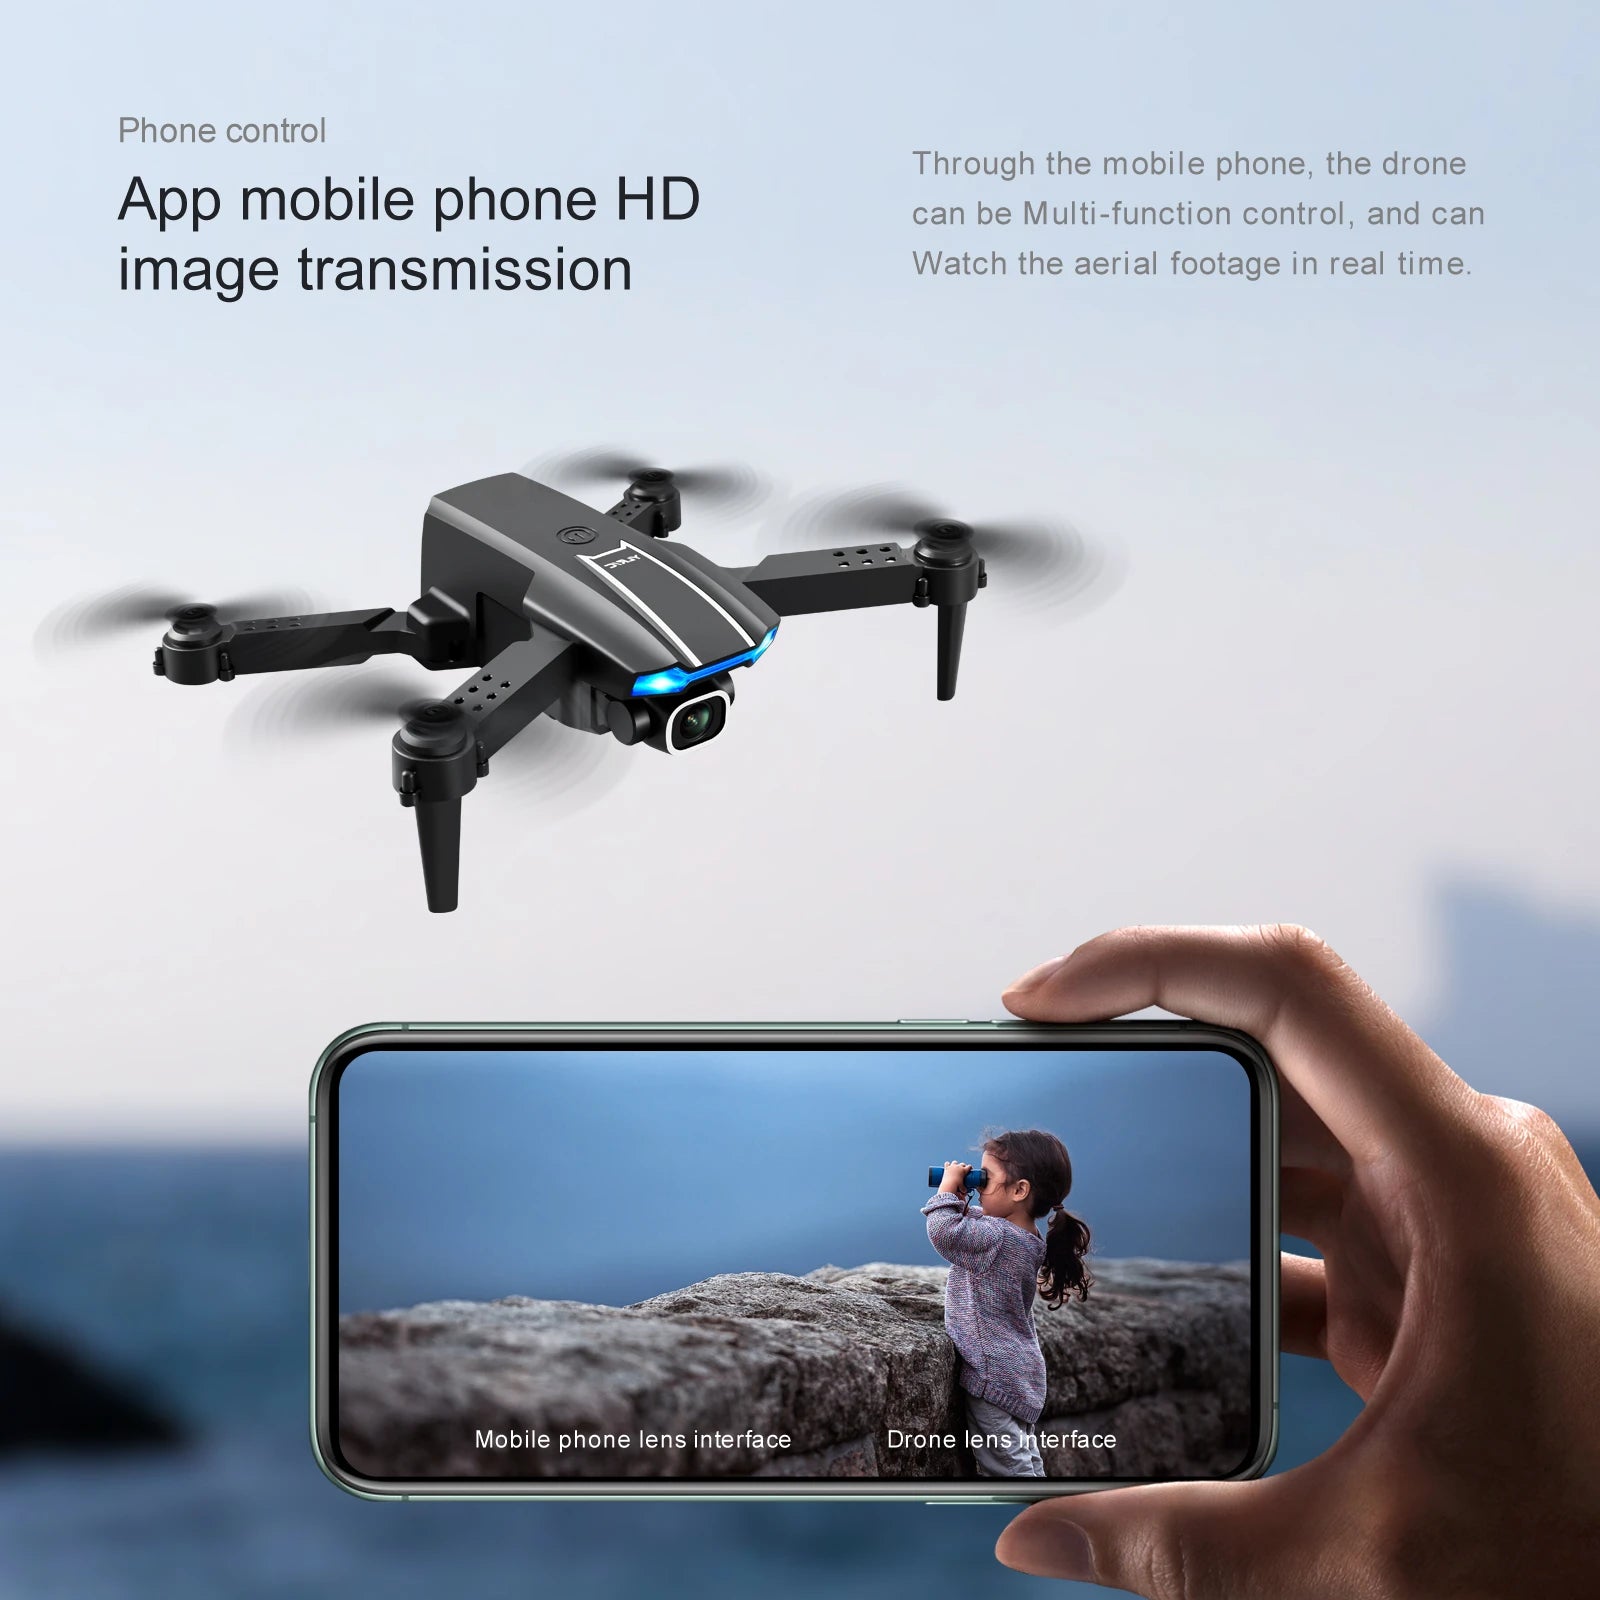 KBDFA S65 4K Mini Drone, drone app mobile phone hd can be multi-function control,